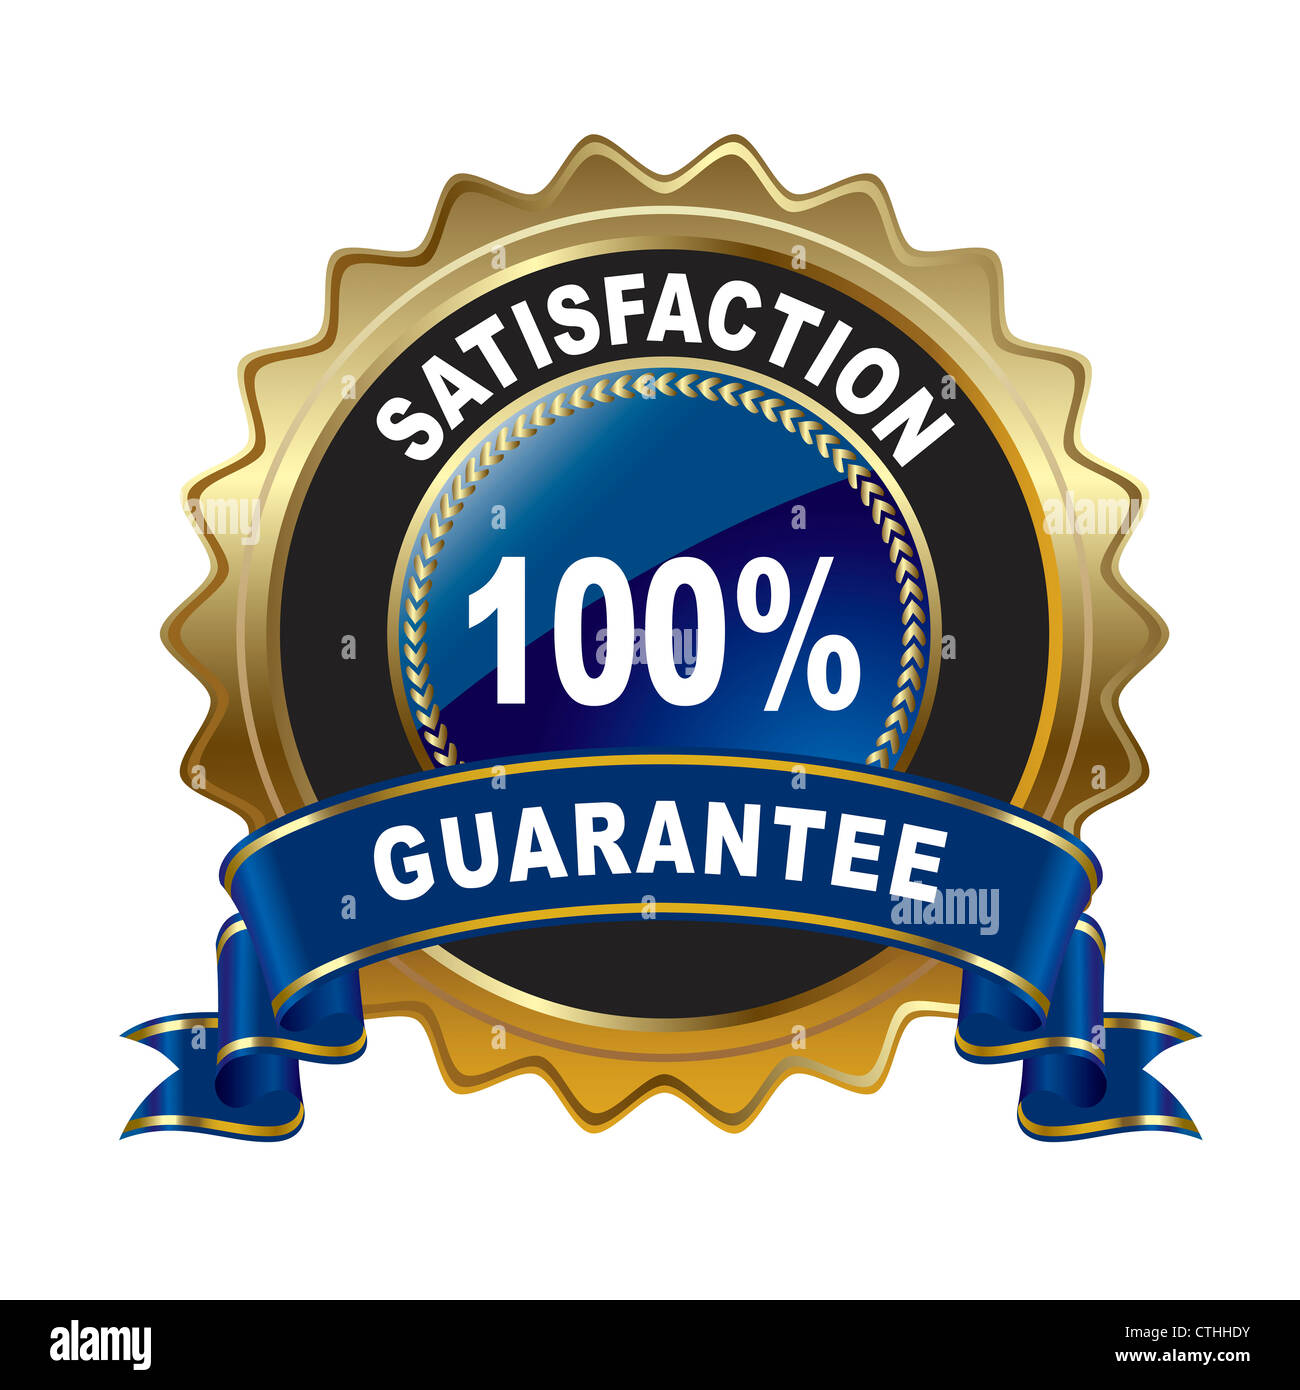 golden guarantee satisfaction Stock Photo - Alamy